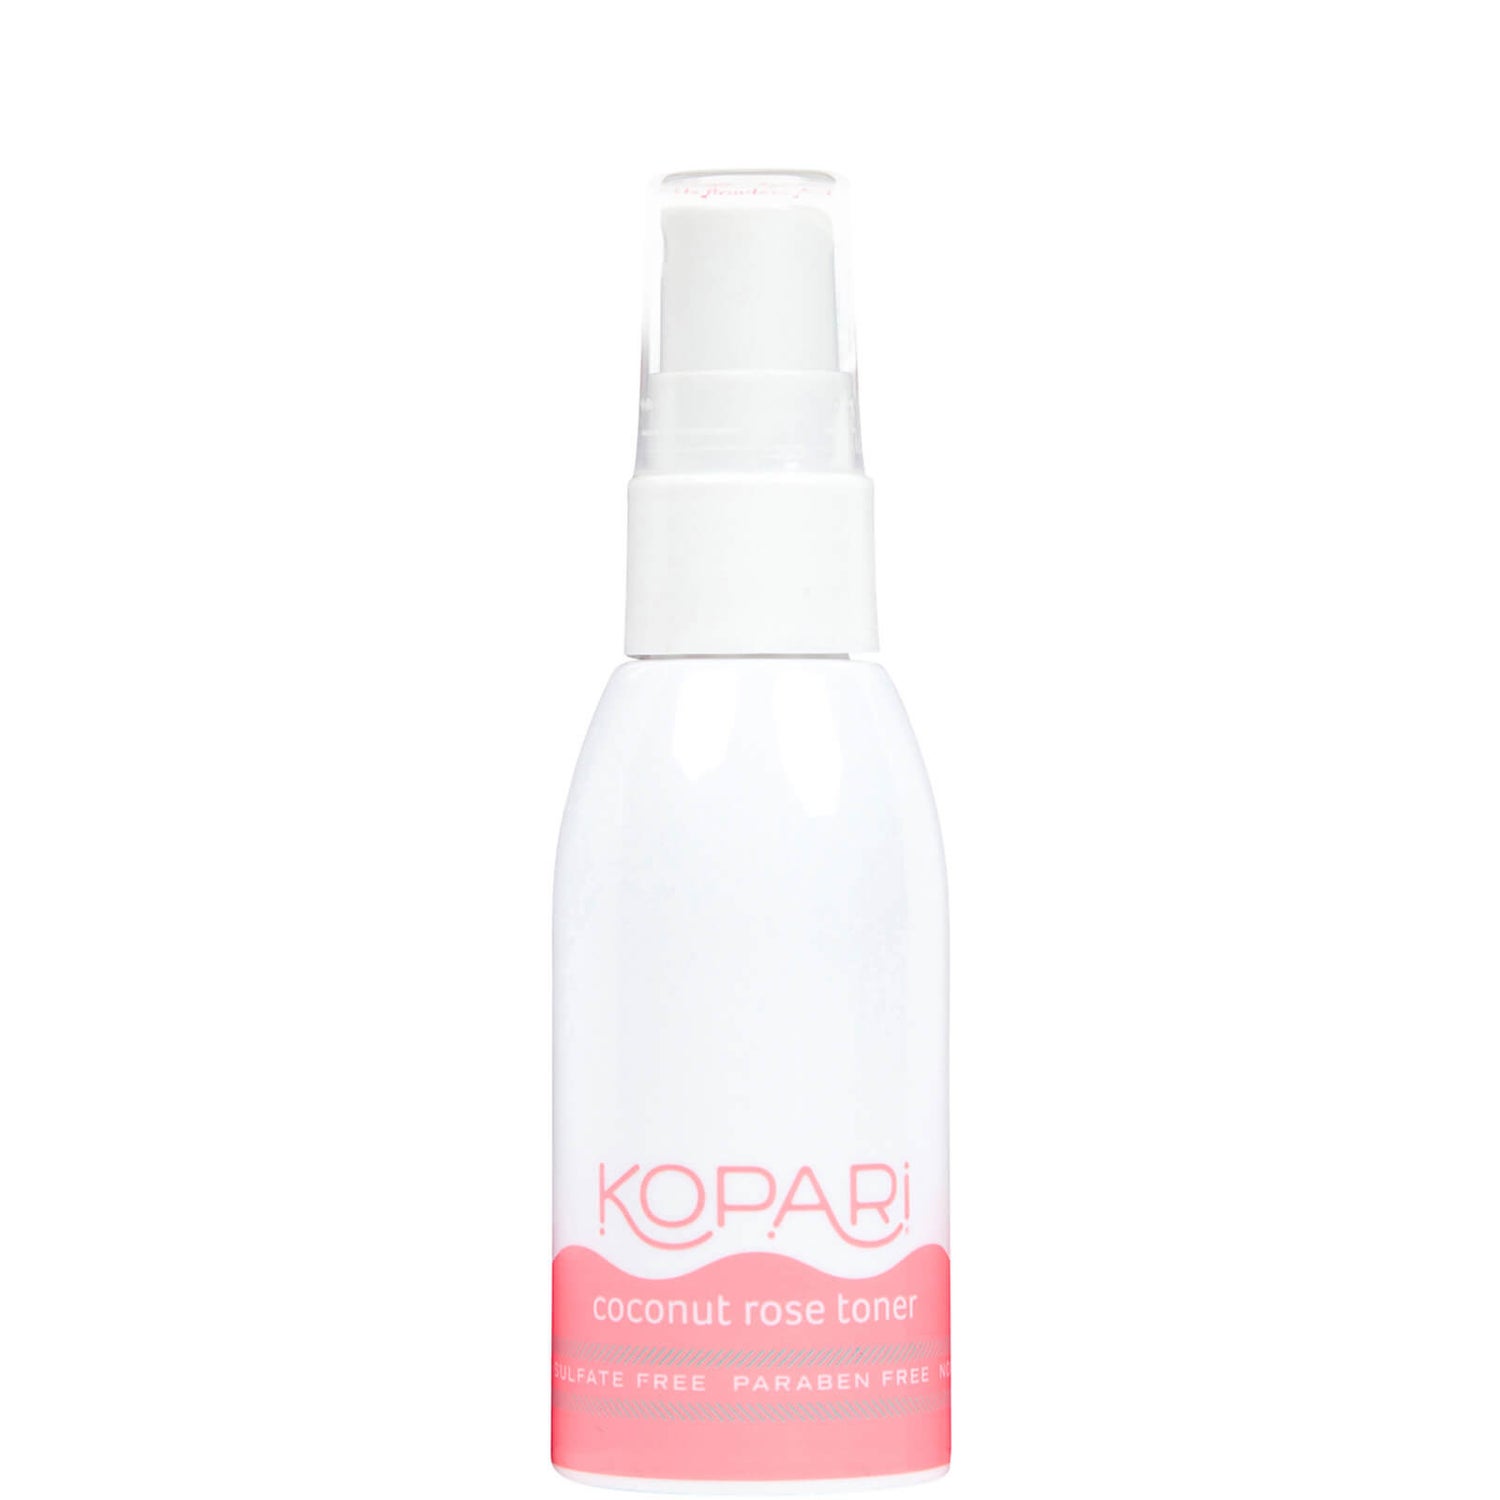 Kopari Beauty Coconut Rose Toner Mini 60ml